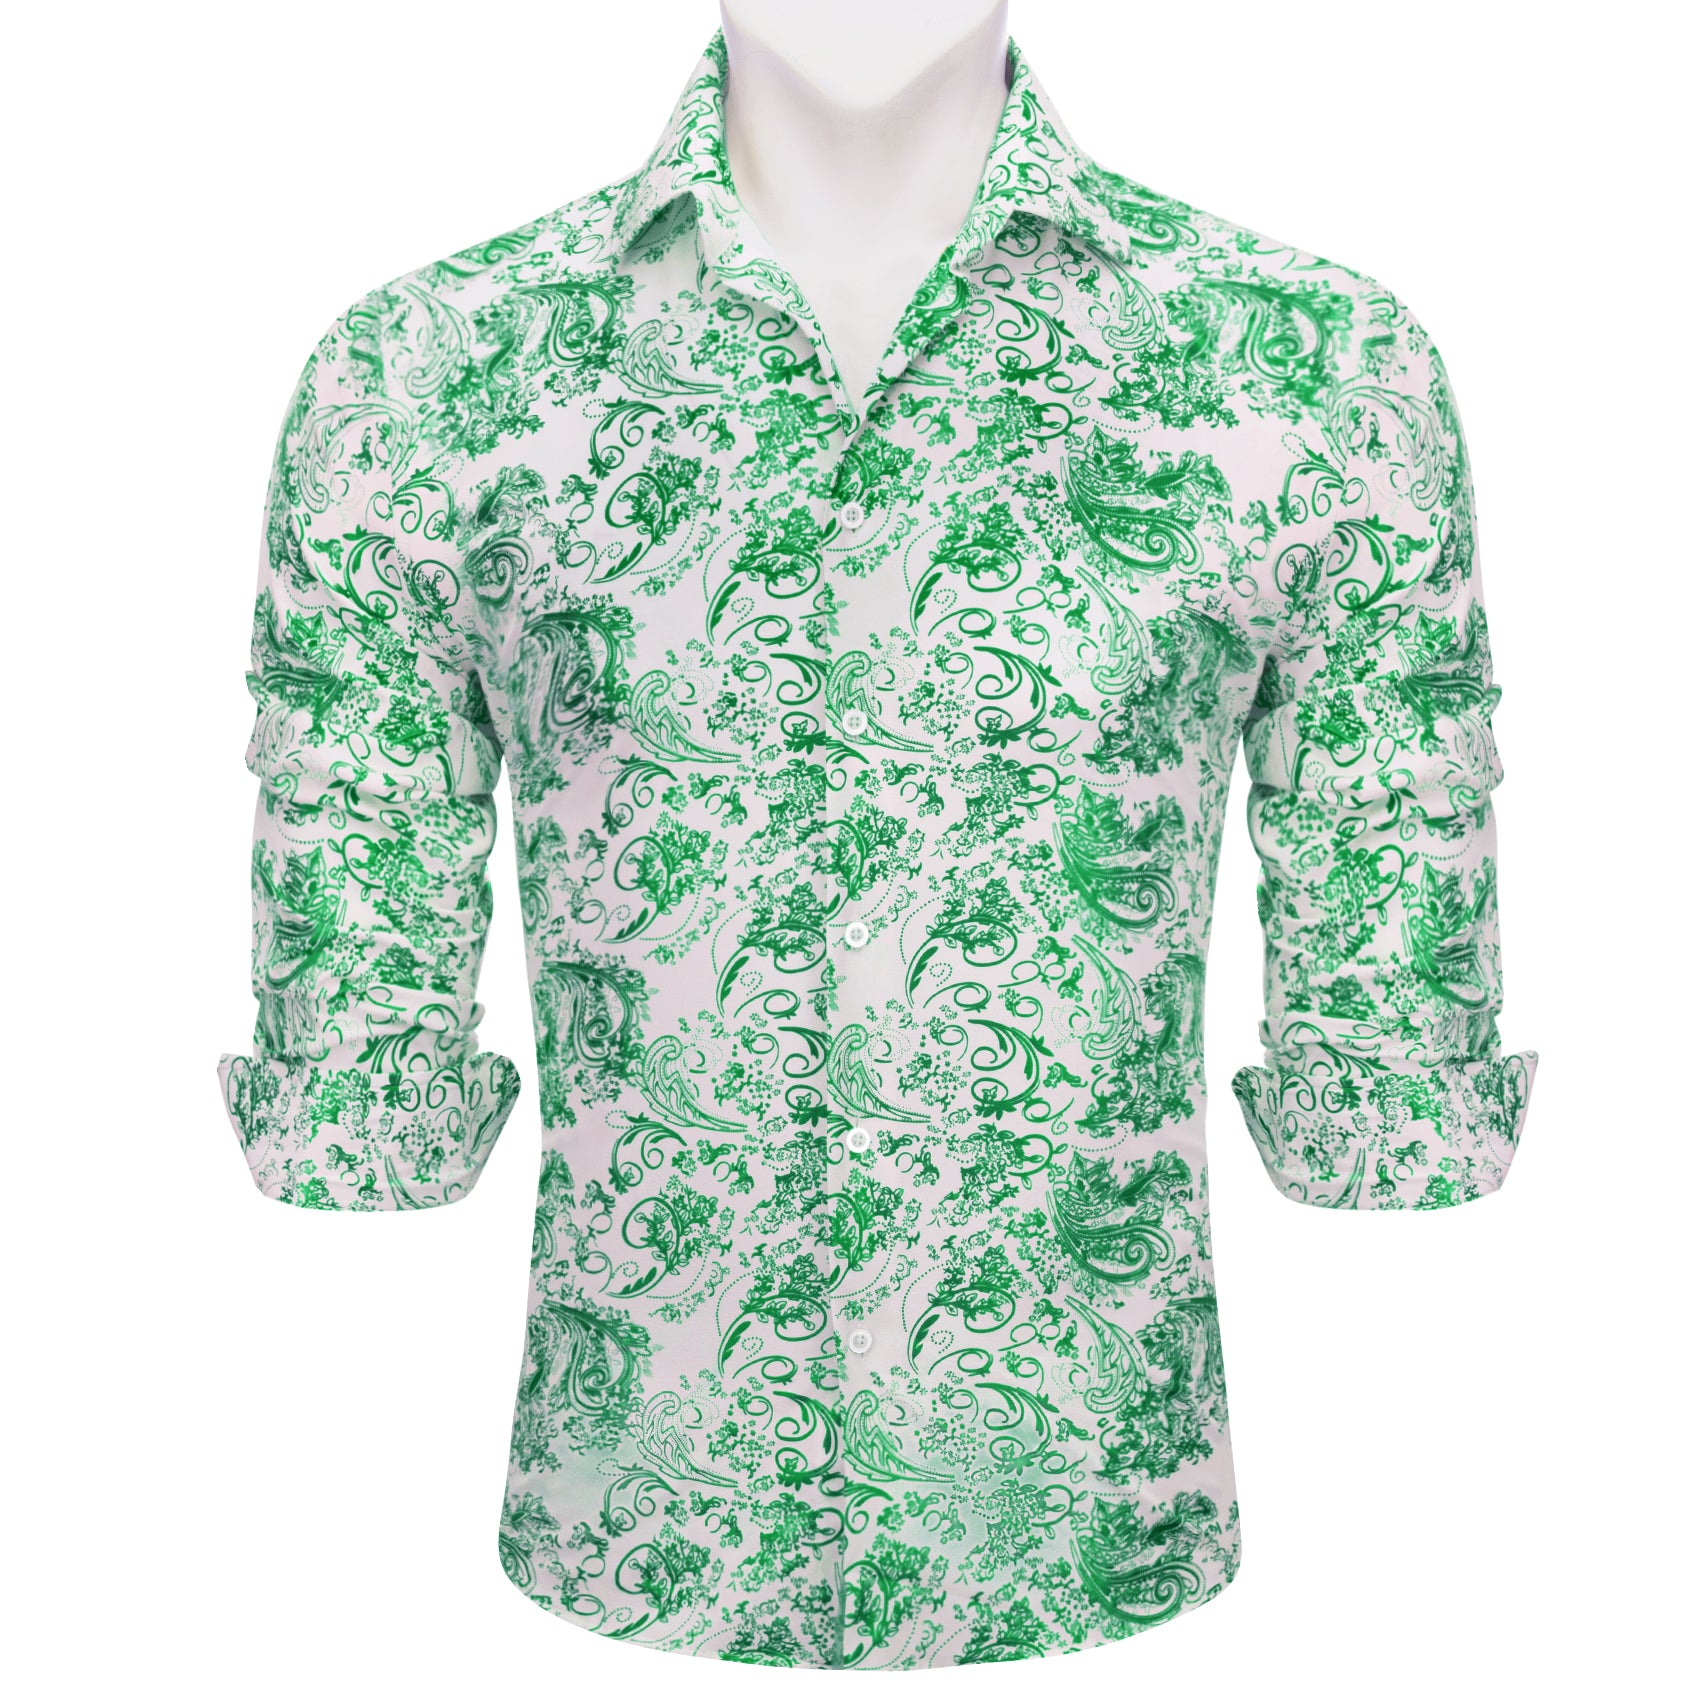 Barry.wang Refreshing White Green Floral Silk Men's Shirt